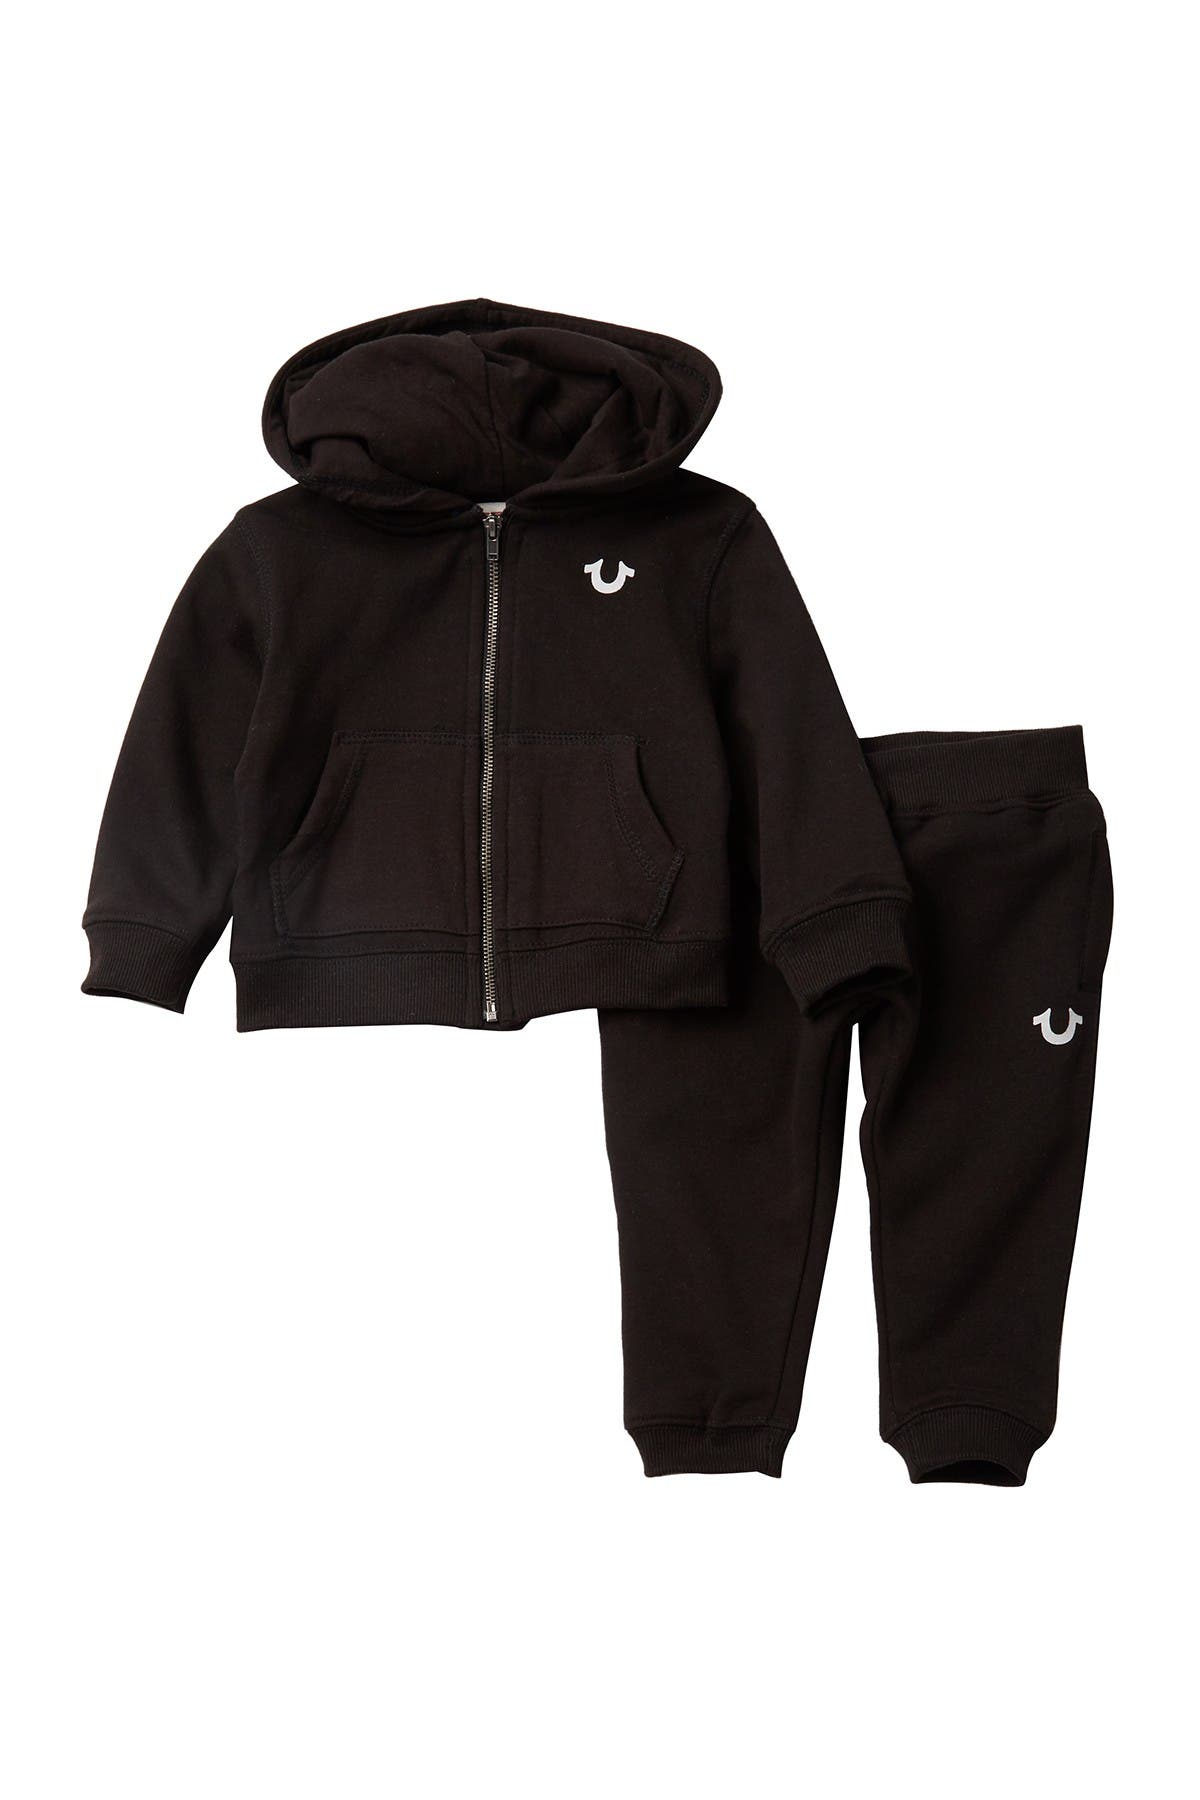 true religion sweatpants and hoodie